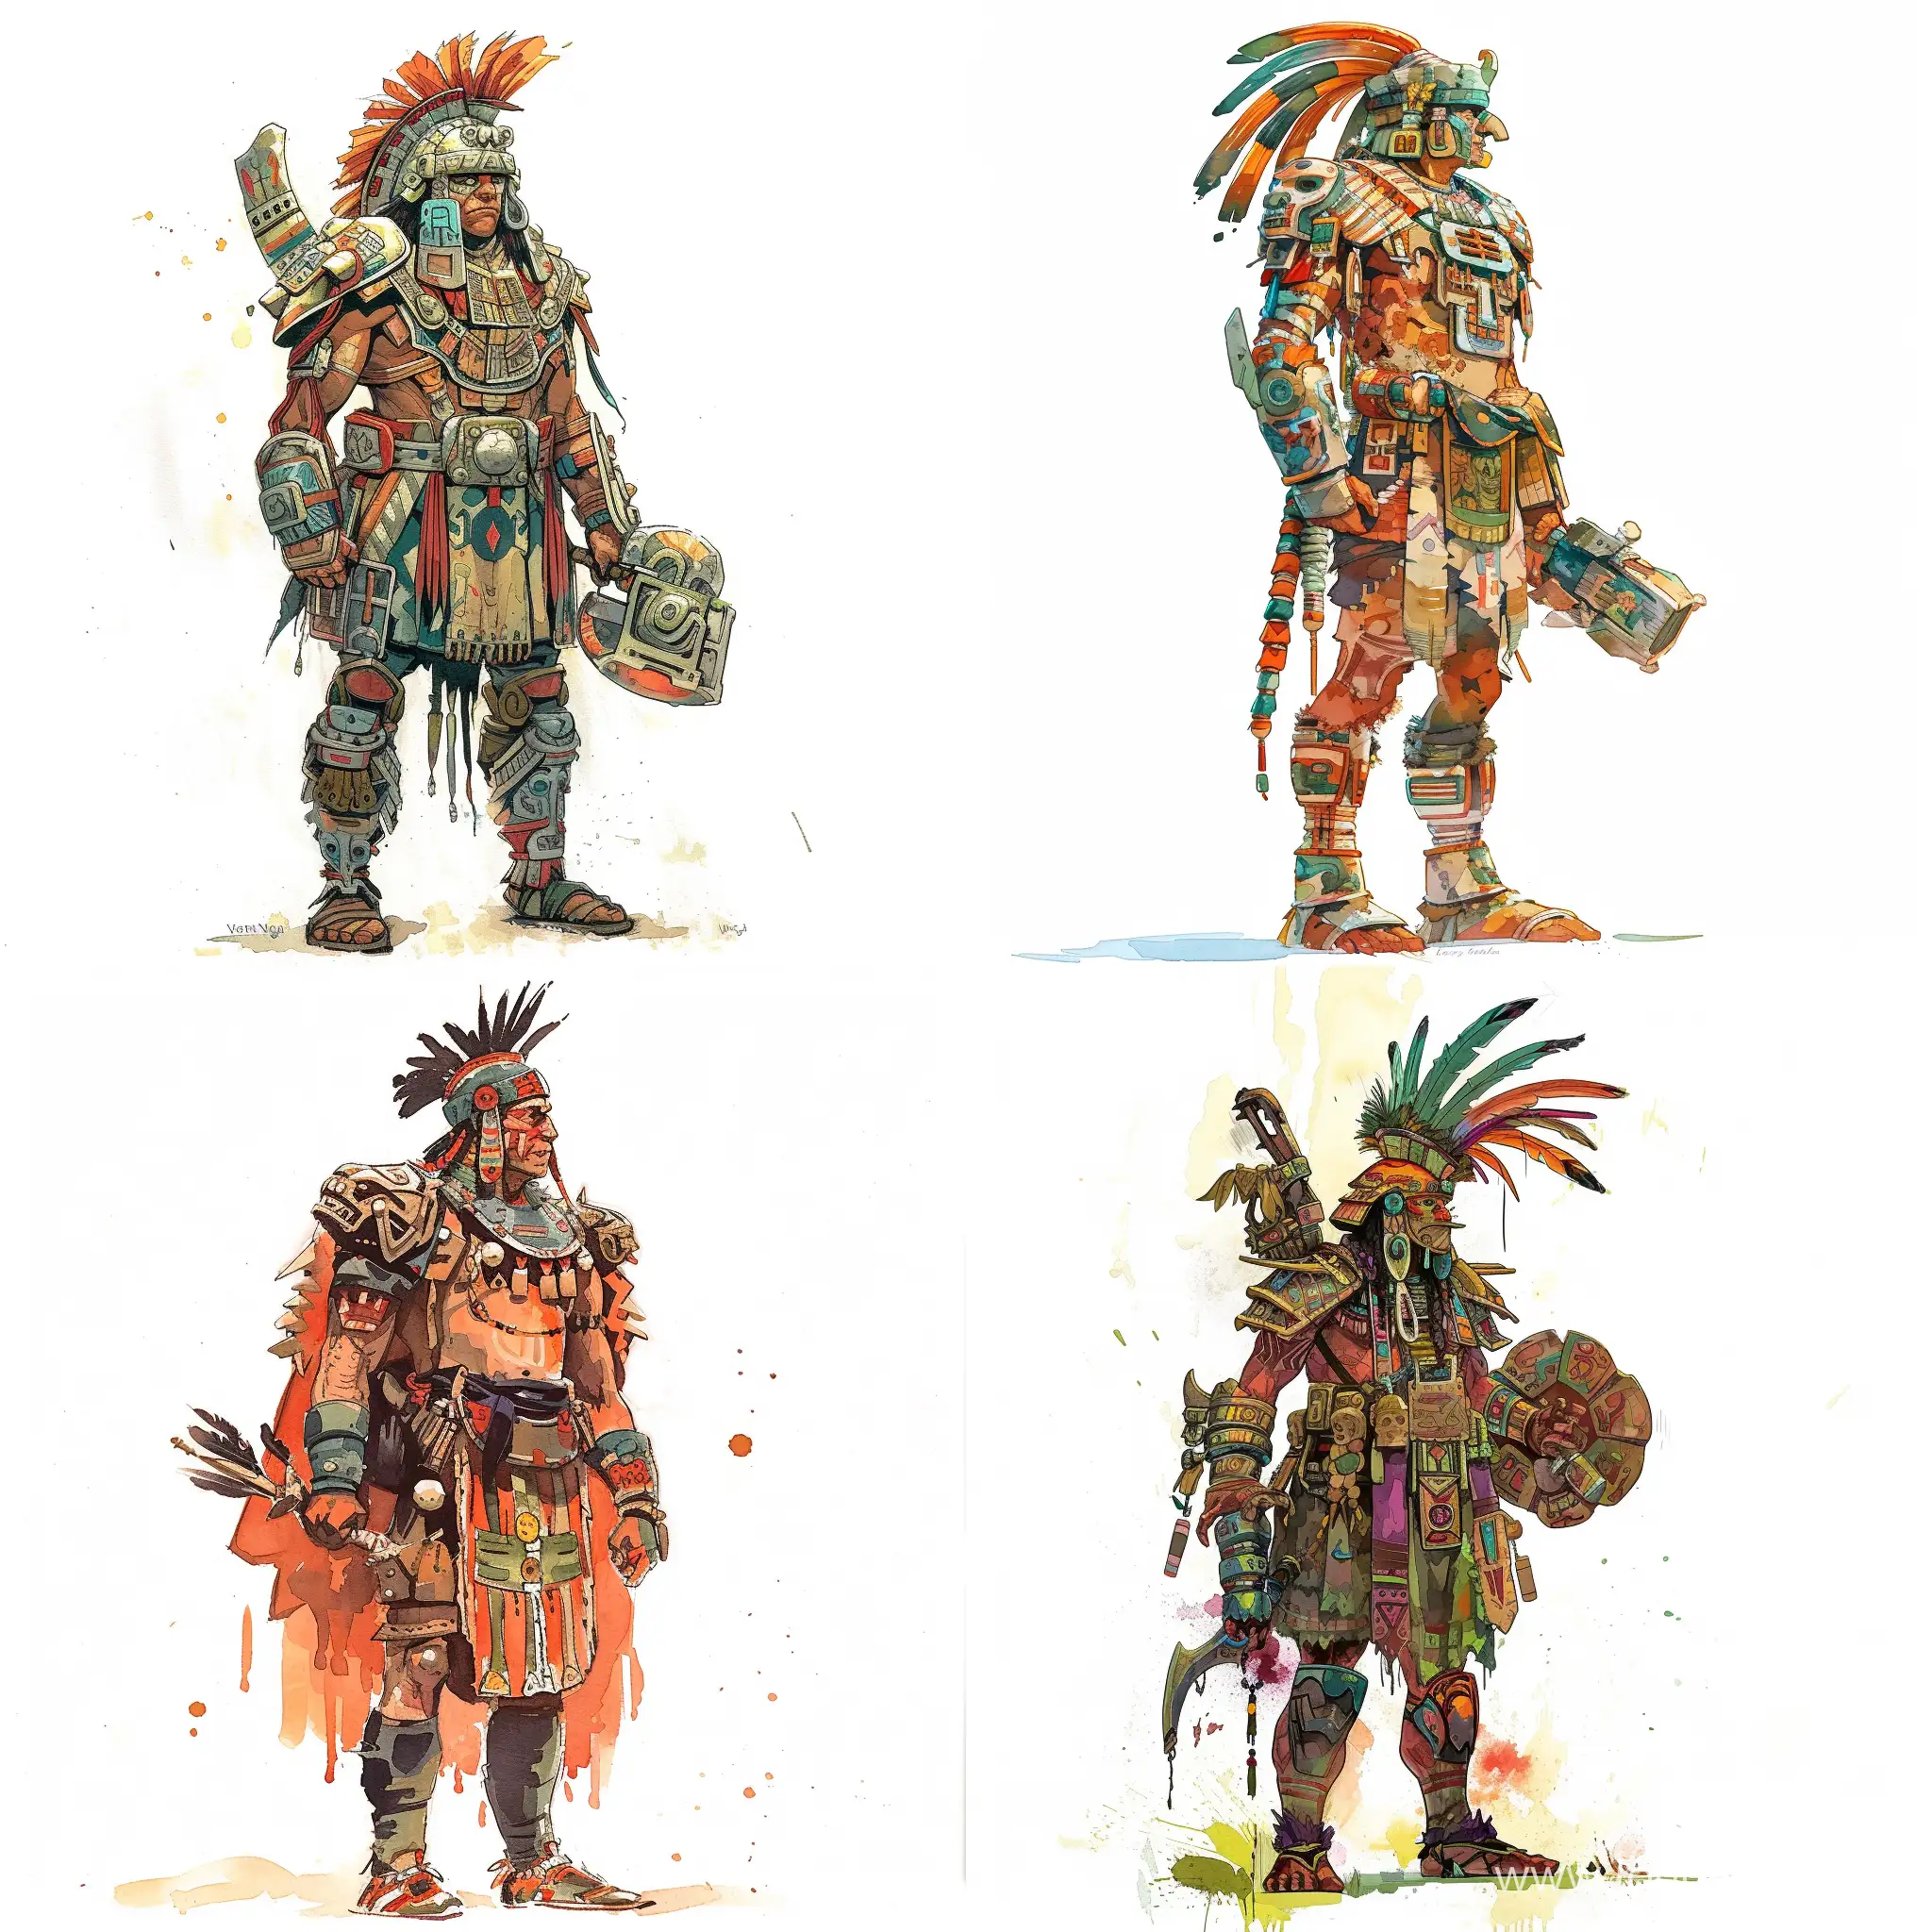 Stylized-Ancient-Aztec-Warrior-in-Decorative-Combat-Gear